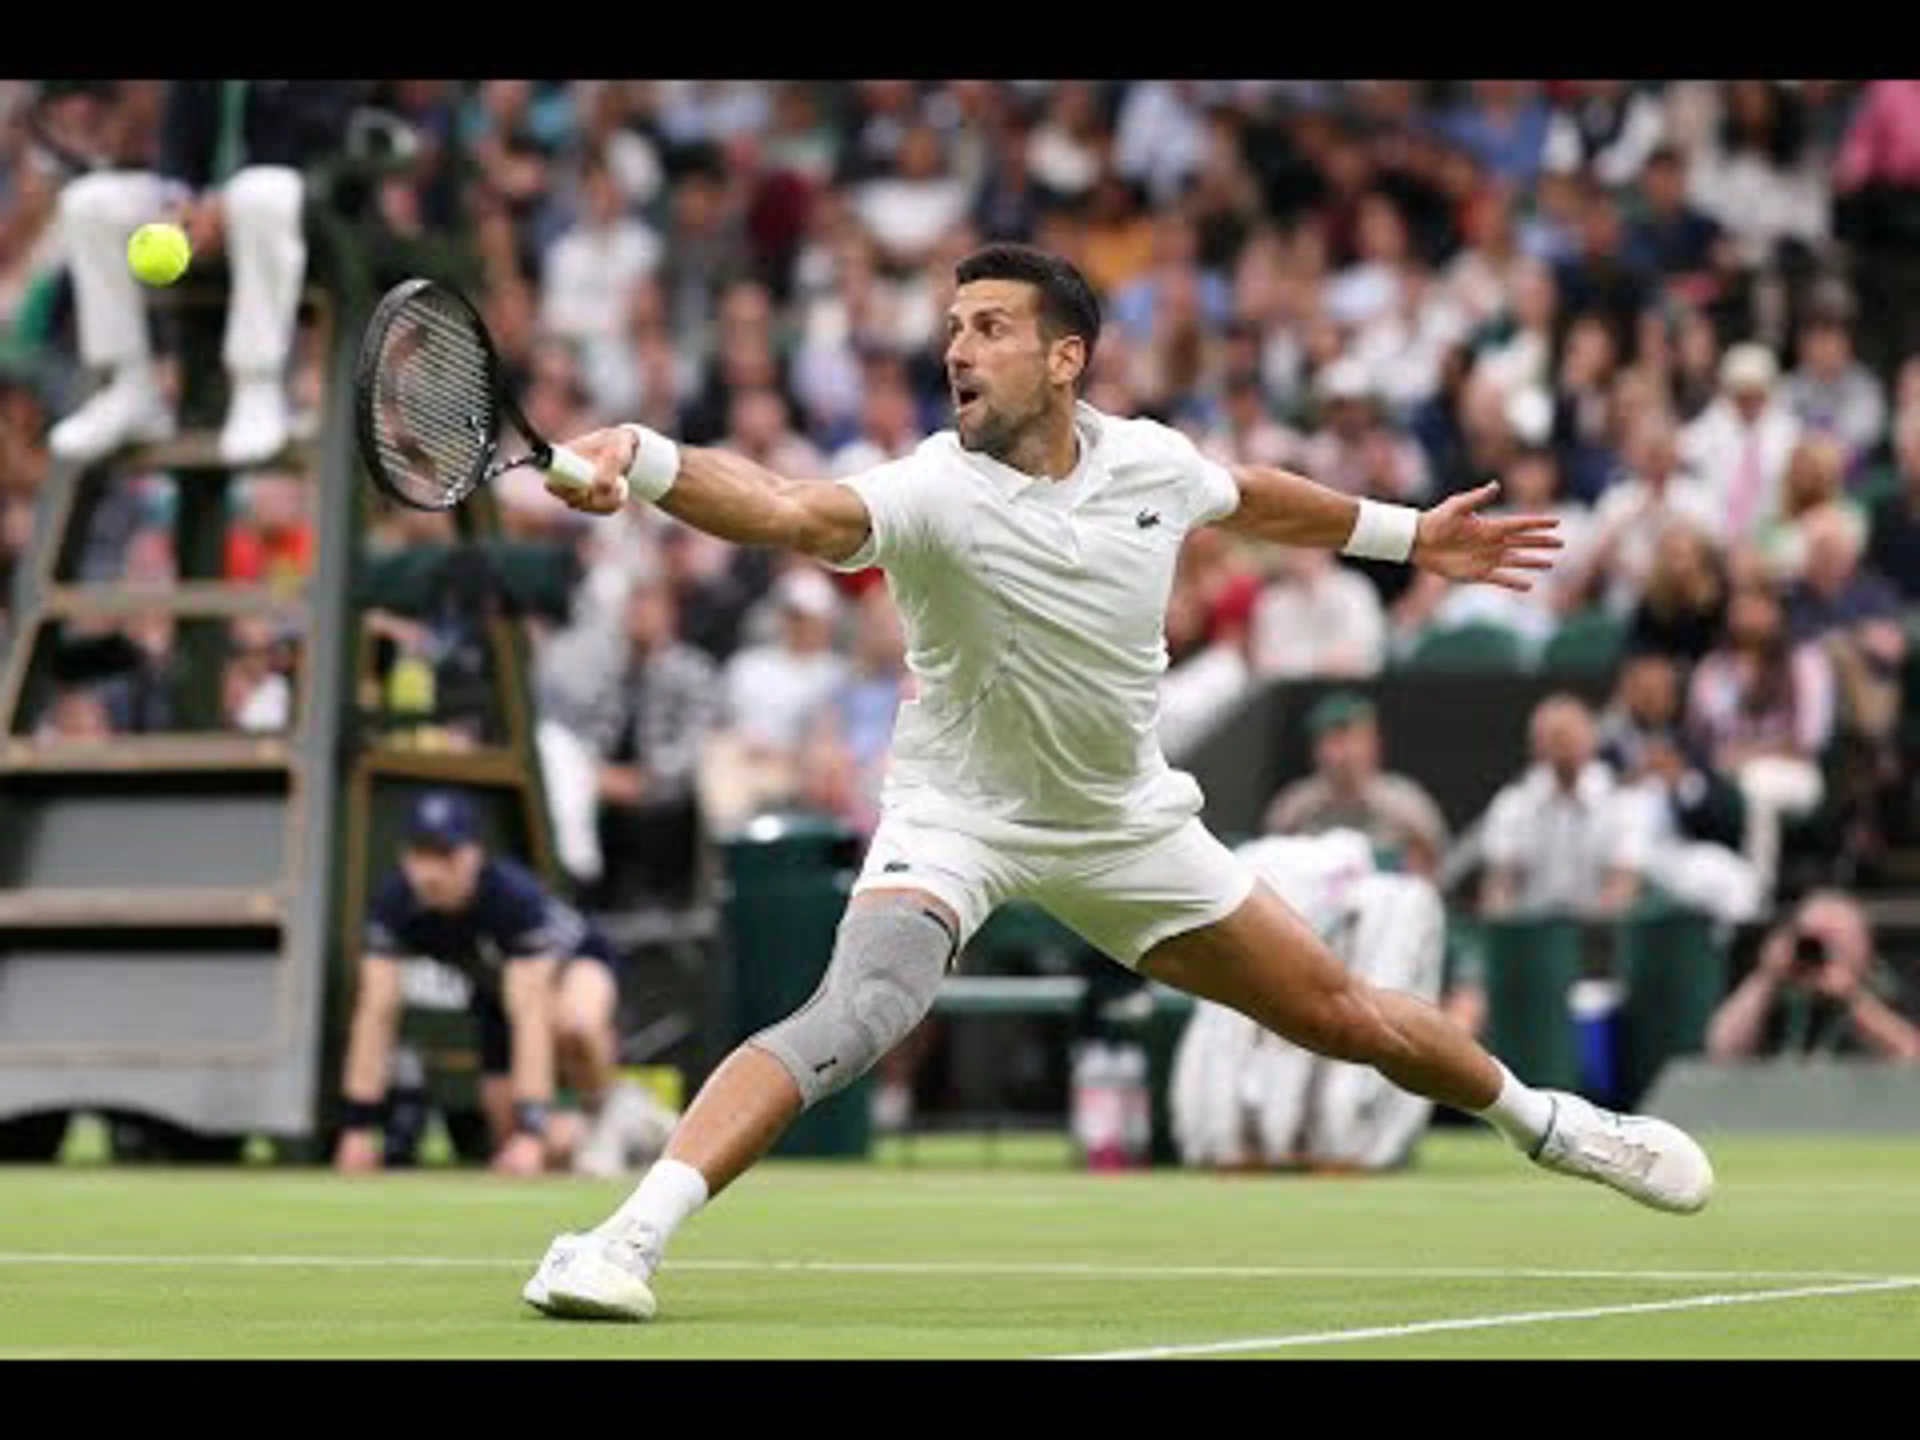 Lorenzo Musetti v Novak Djokovic | Men's Semi-final 2 | Highlights | Wimbledon